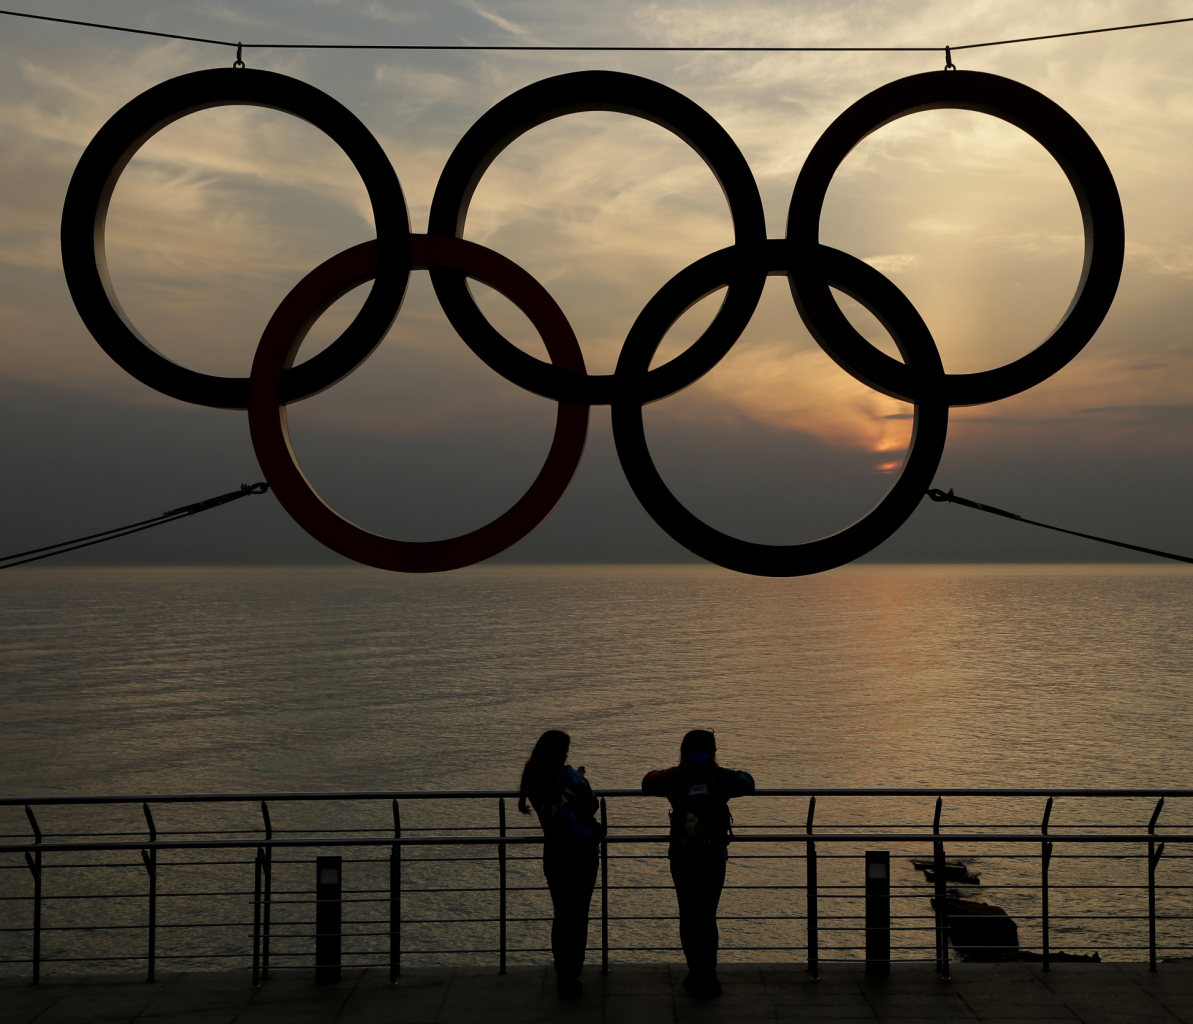 Олимпийские Игры в Сочи-2014 (Winter Olympics Sochi): Olympic фото (photo)